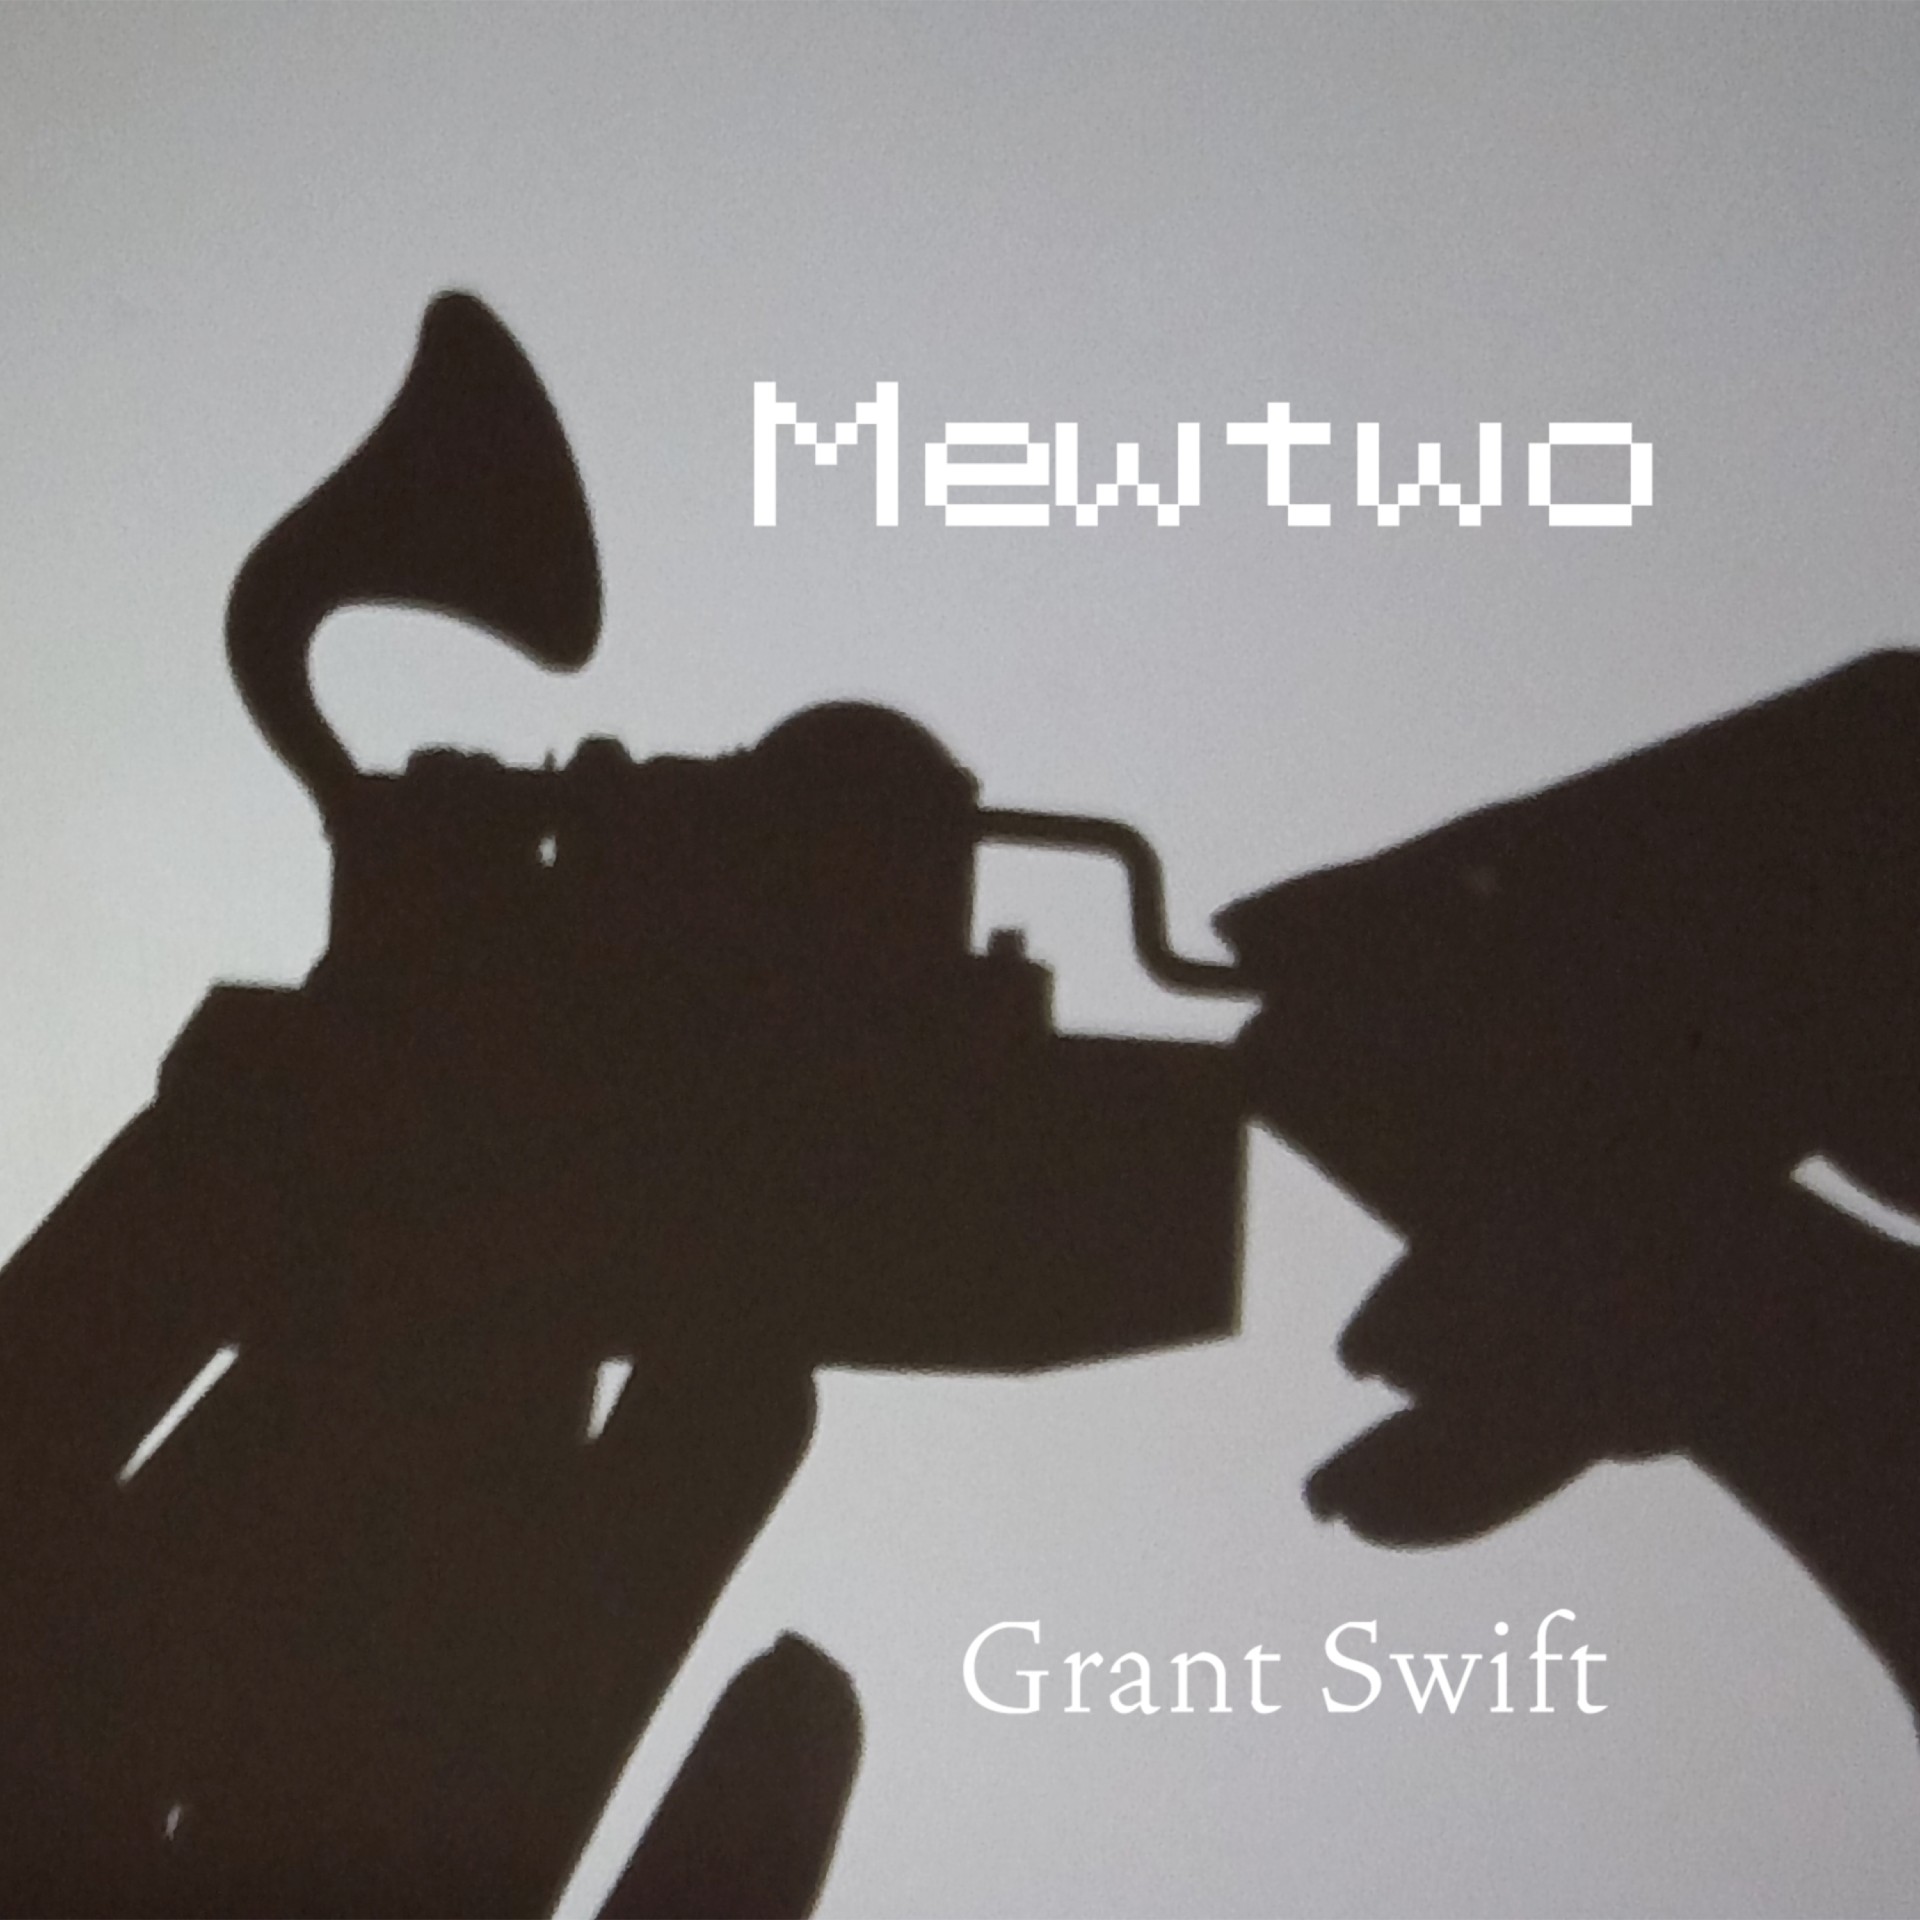 Grant Swift “Mewtwo” single artwork